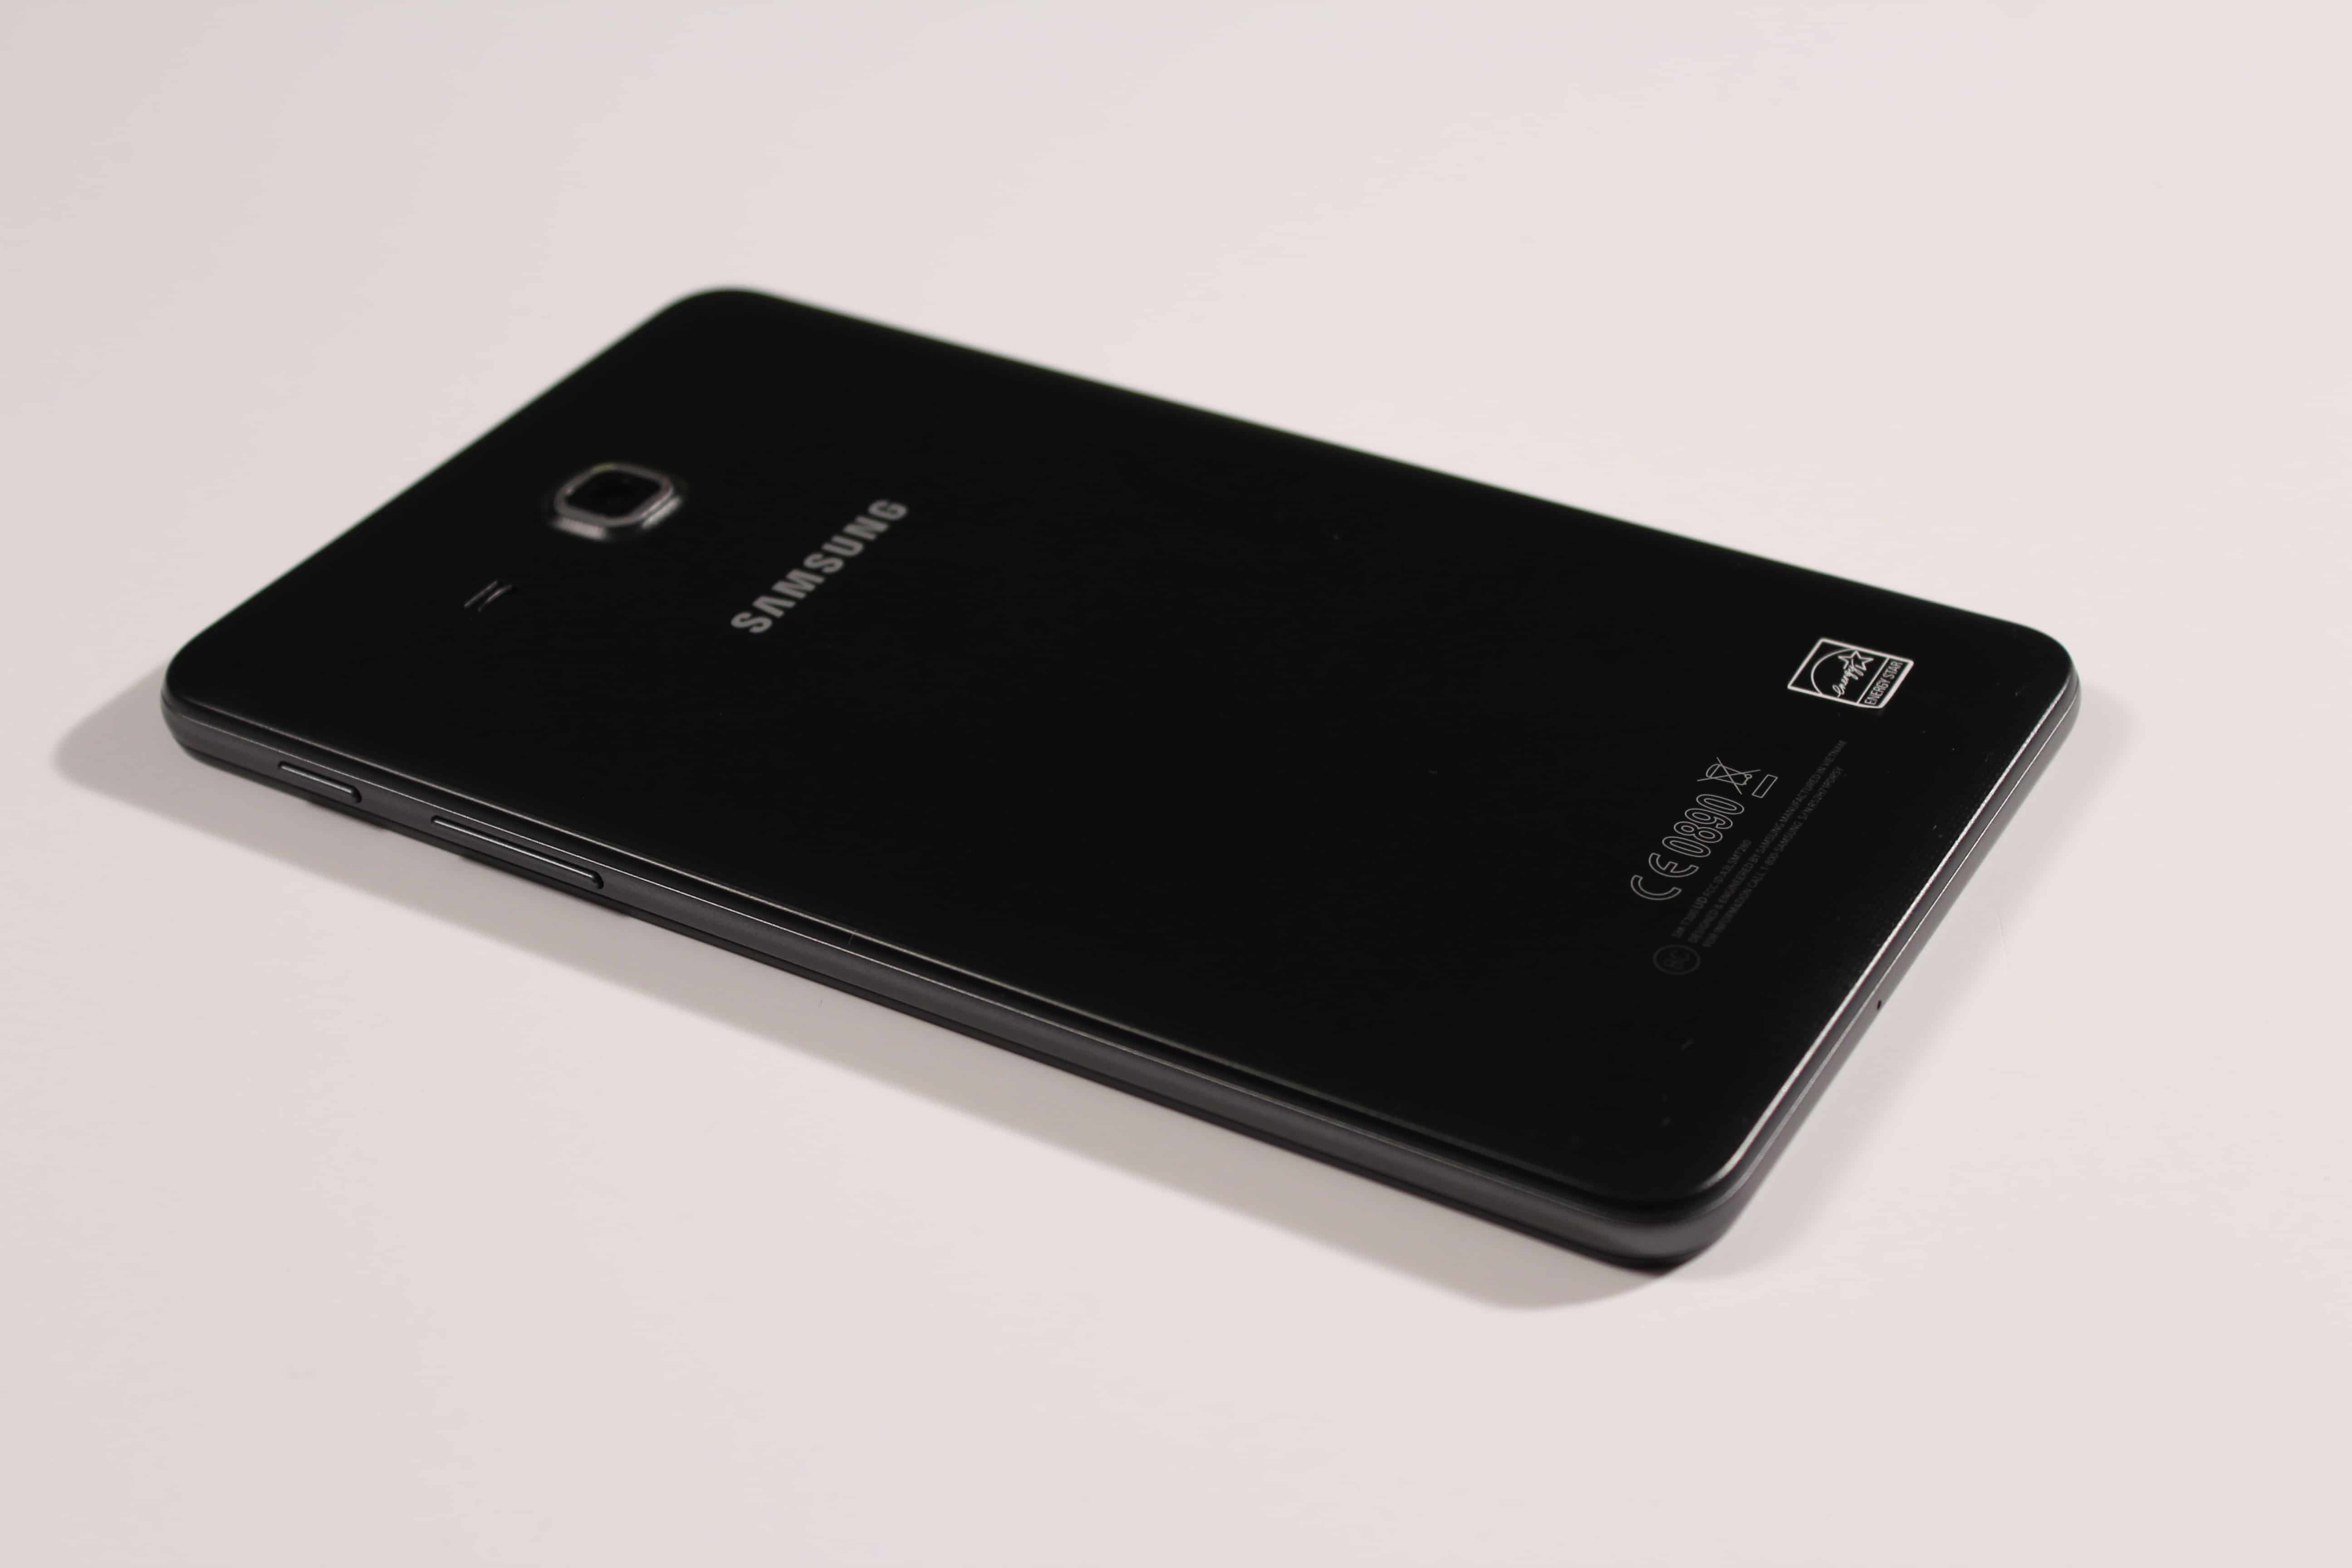 Gymnast kaart timmerman B&N Samsung Galaxy Tab A Nook Review - Good e-Reader